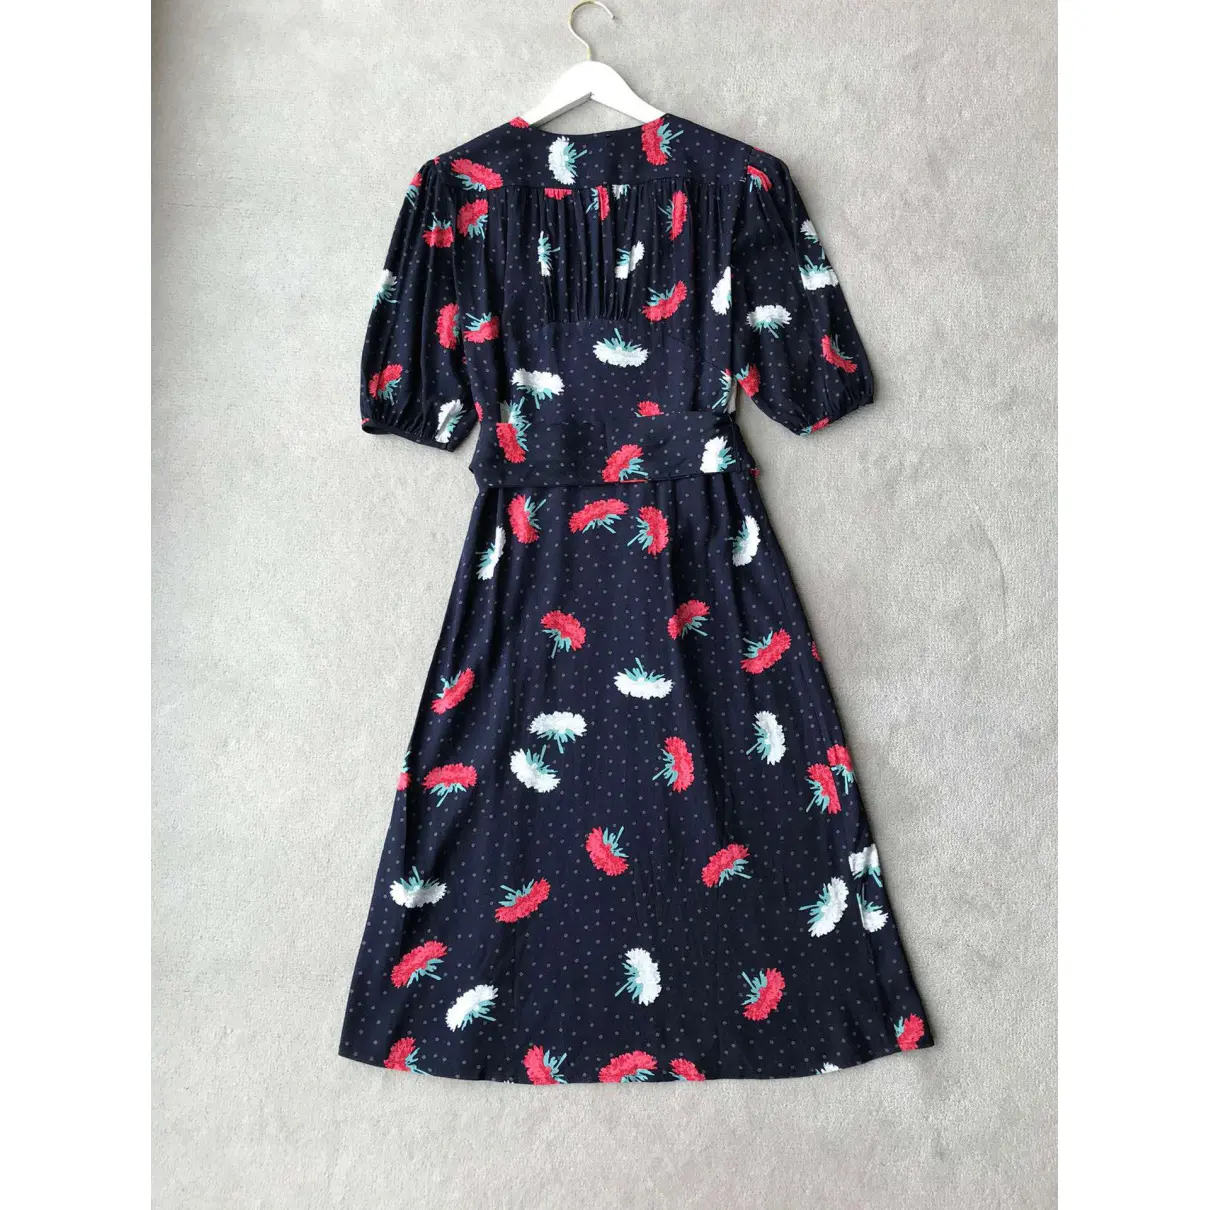 Buy Rouje Spring Summer 2020 mid-length dress online